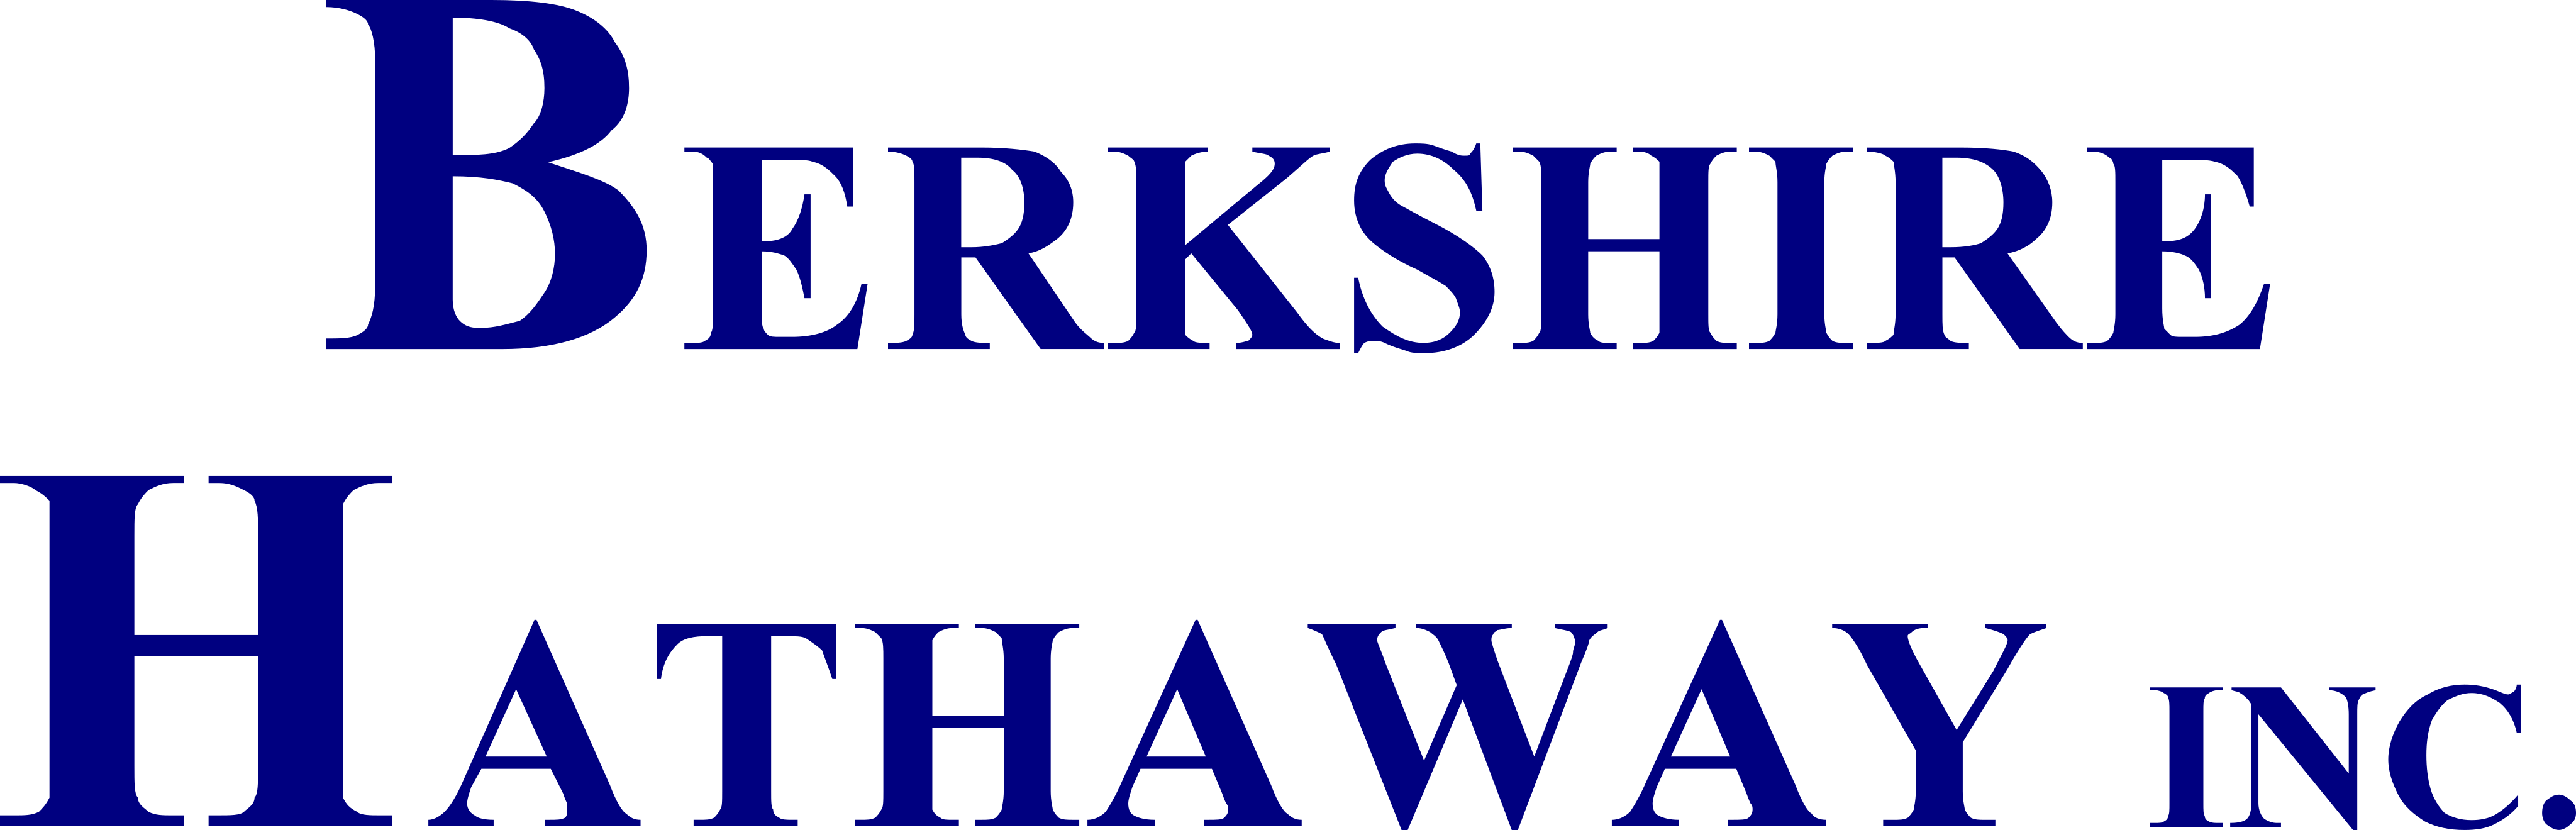 Berkshire Hathaway Logo.